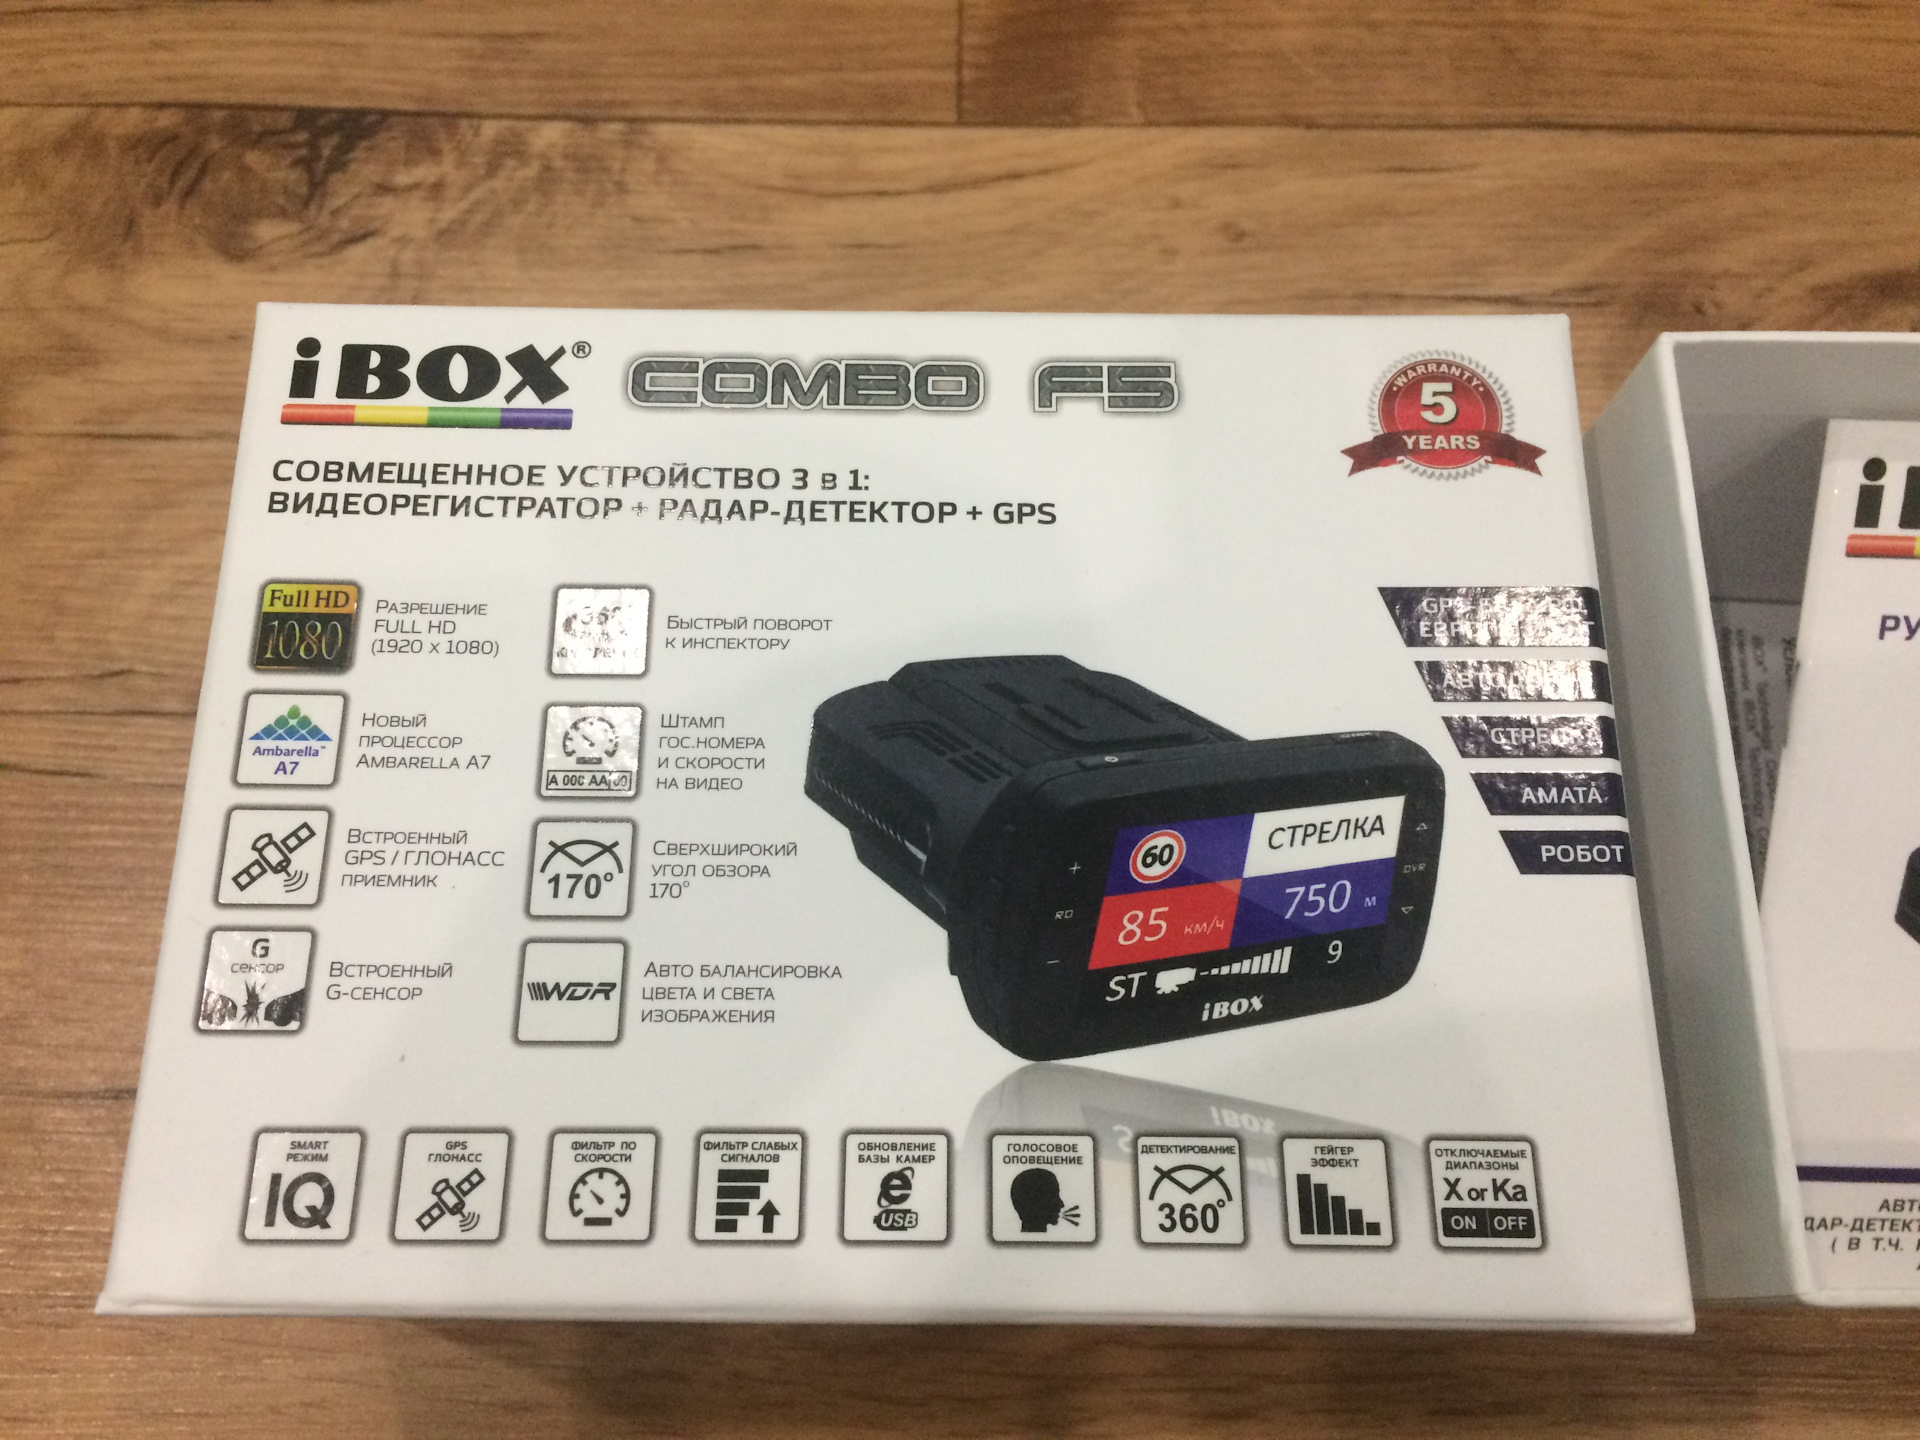 IBOX Combo gt. IBOX видеорегистратор и антирадар 10. Видеорегистратор IBOX инструкция с радар детектором. Ошибка e31 IBOX Combo f5. Радар детекторы ibox отзывы